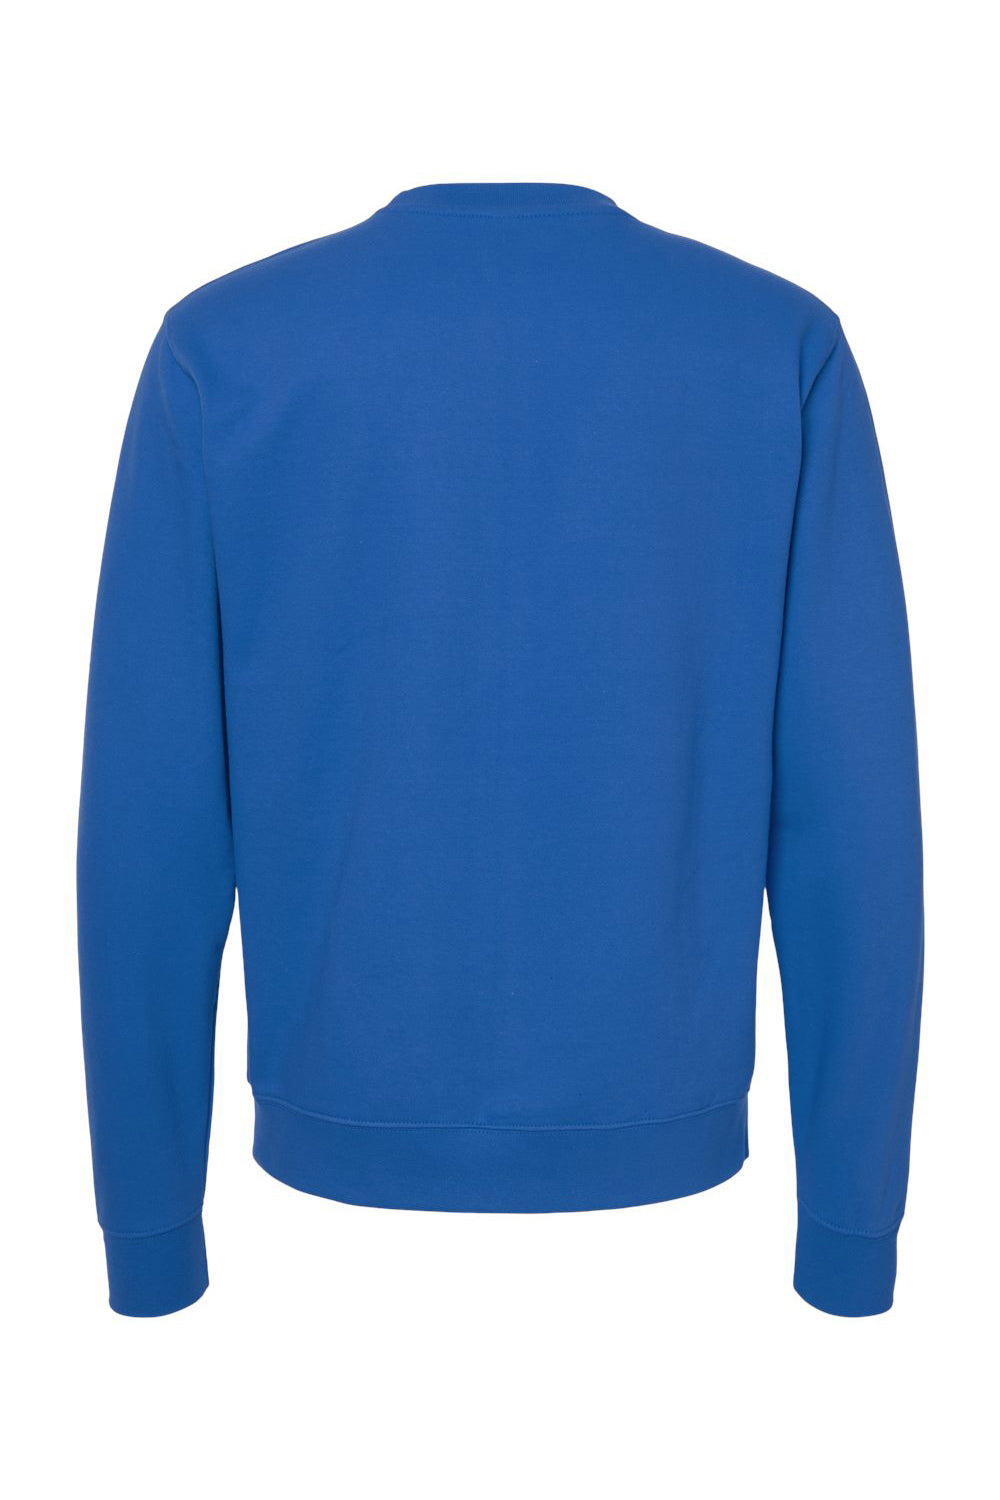 Independent Trading Co. SS3000 Mens Crewneck Sweatshirt Royal Blue Flat Back